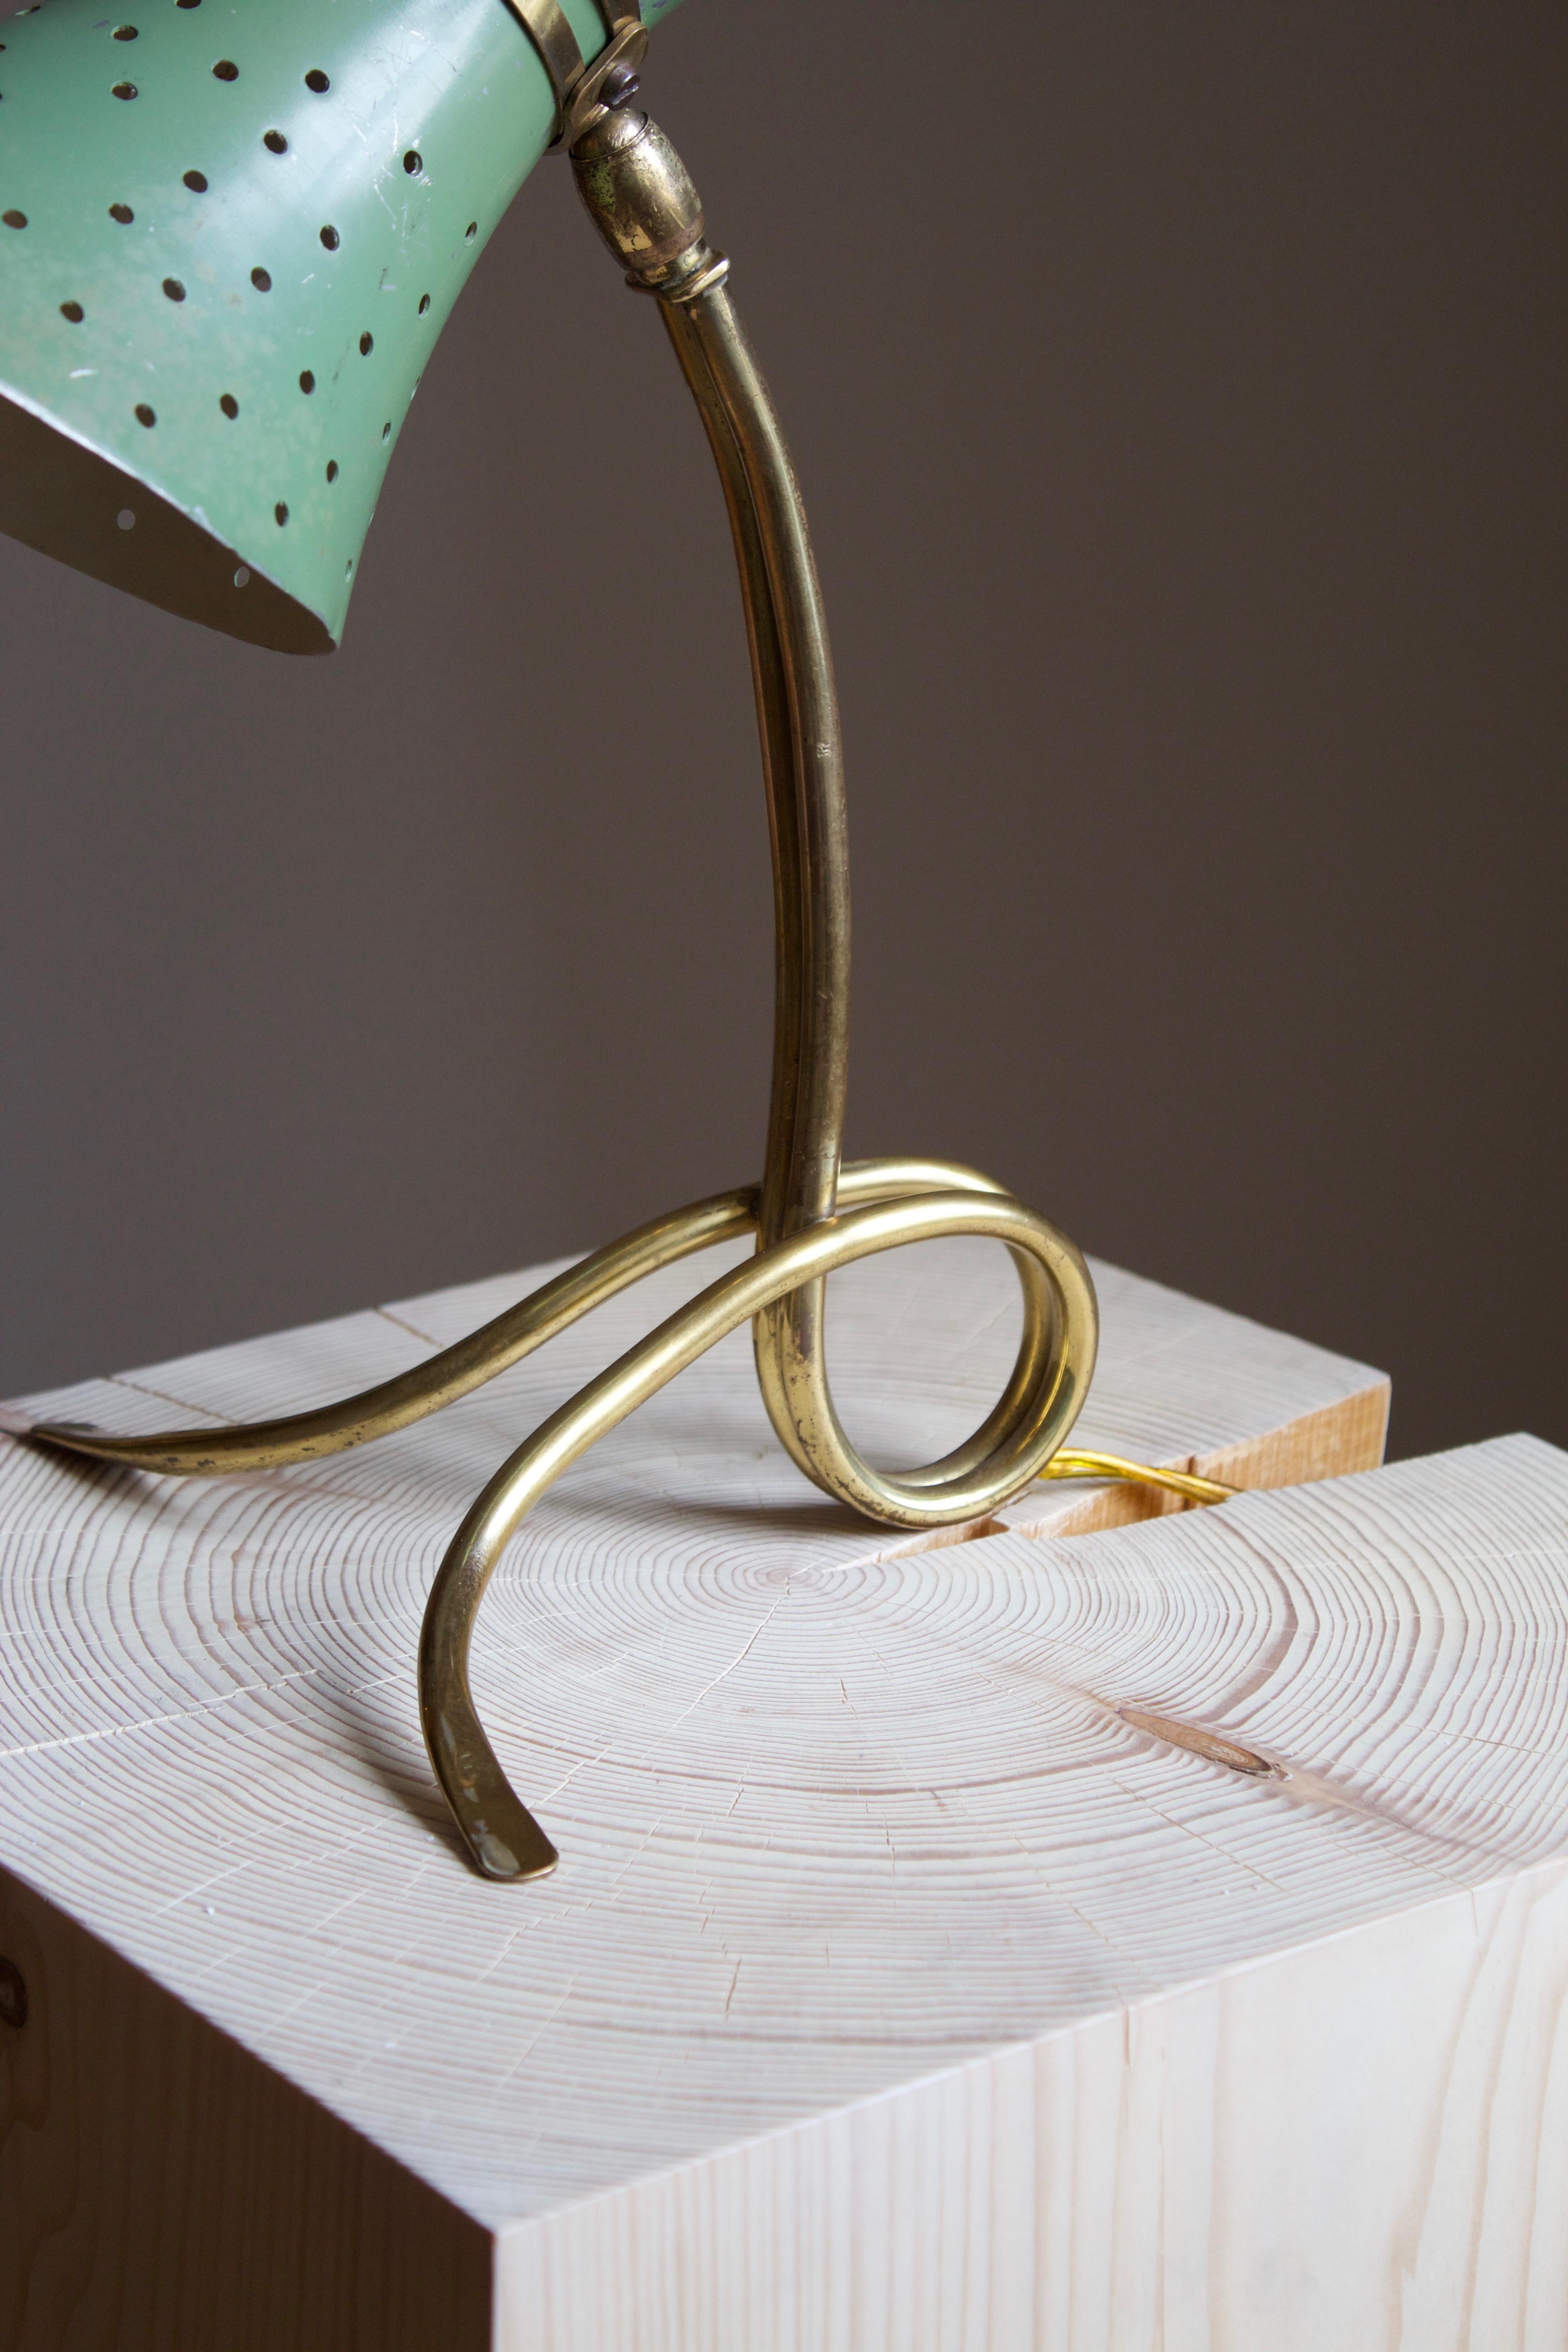 Mid-20th Century Italian Modernist Designer, Adjustable Table Lamp, Brass, Lacquered Metal, 1950s